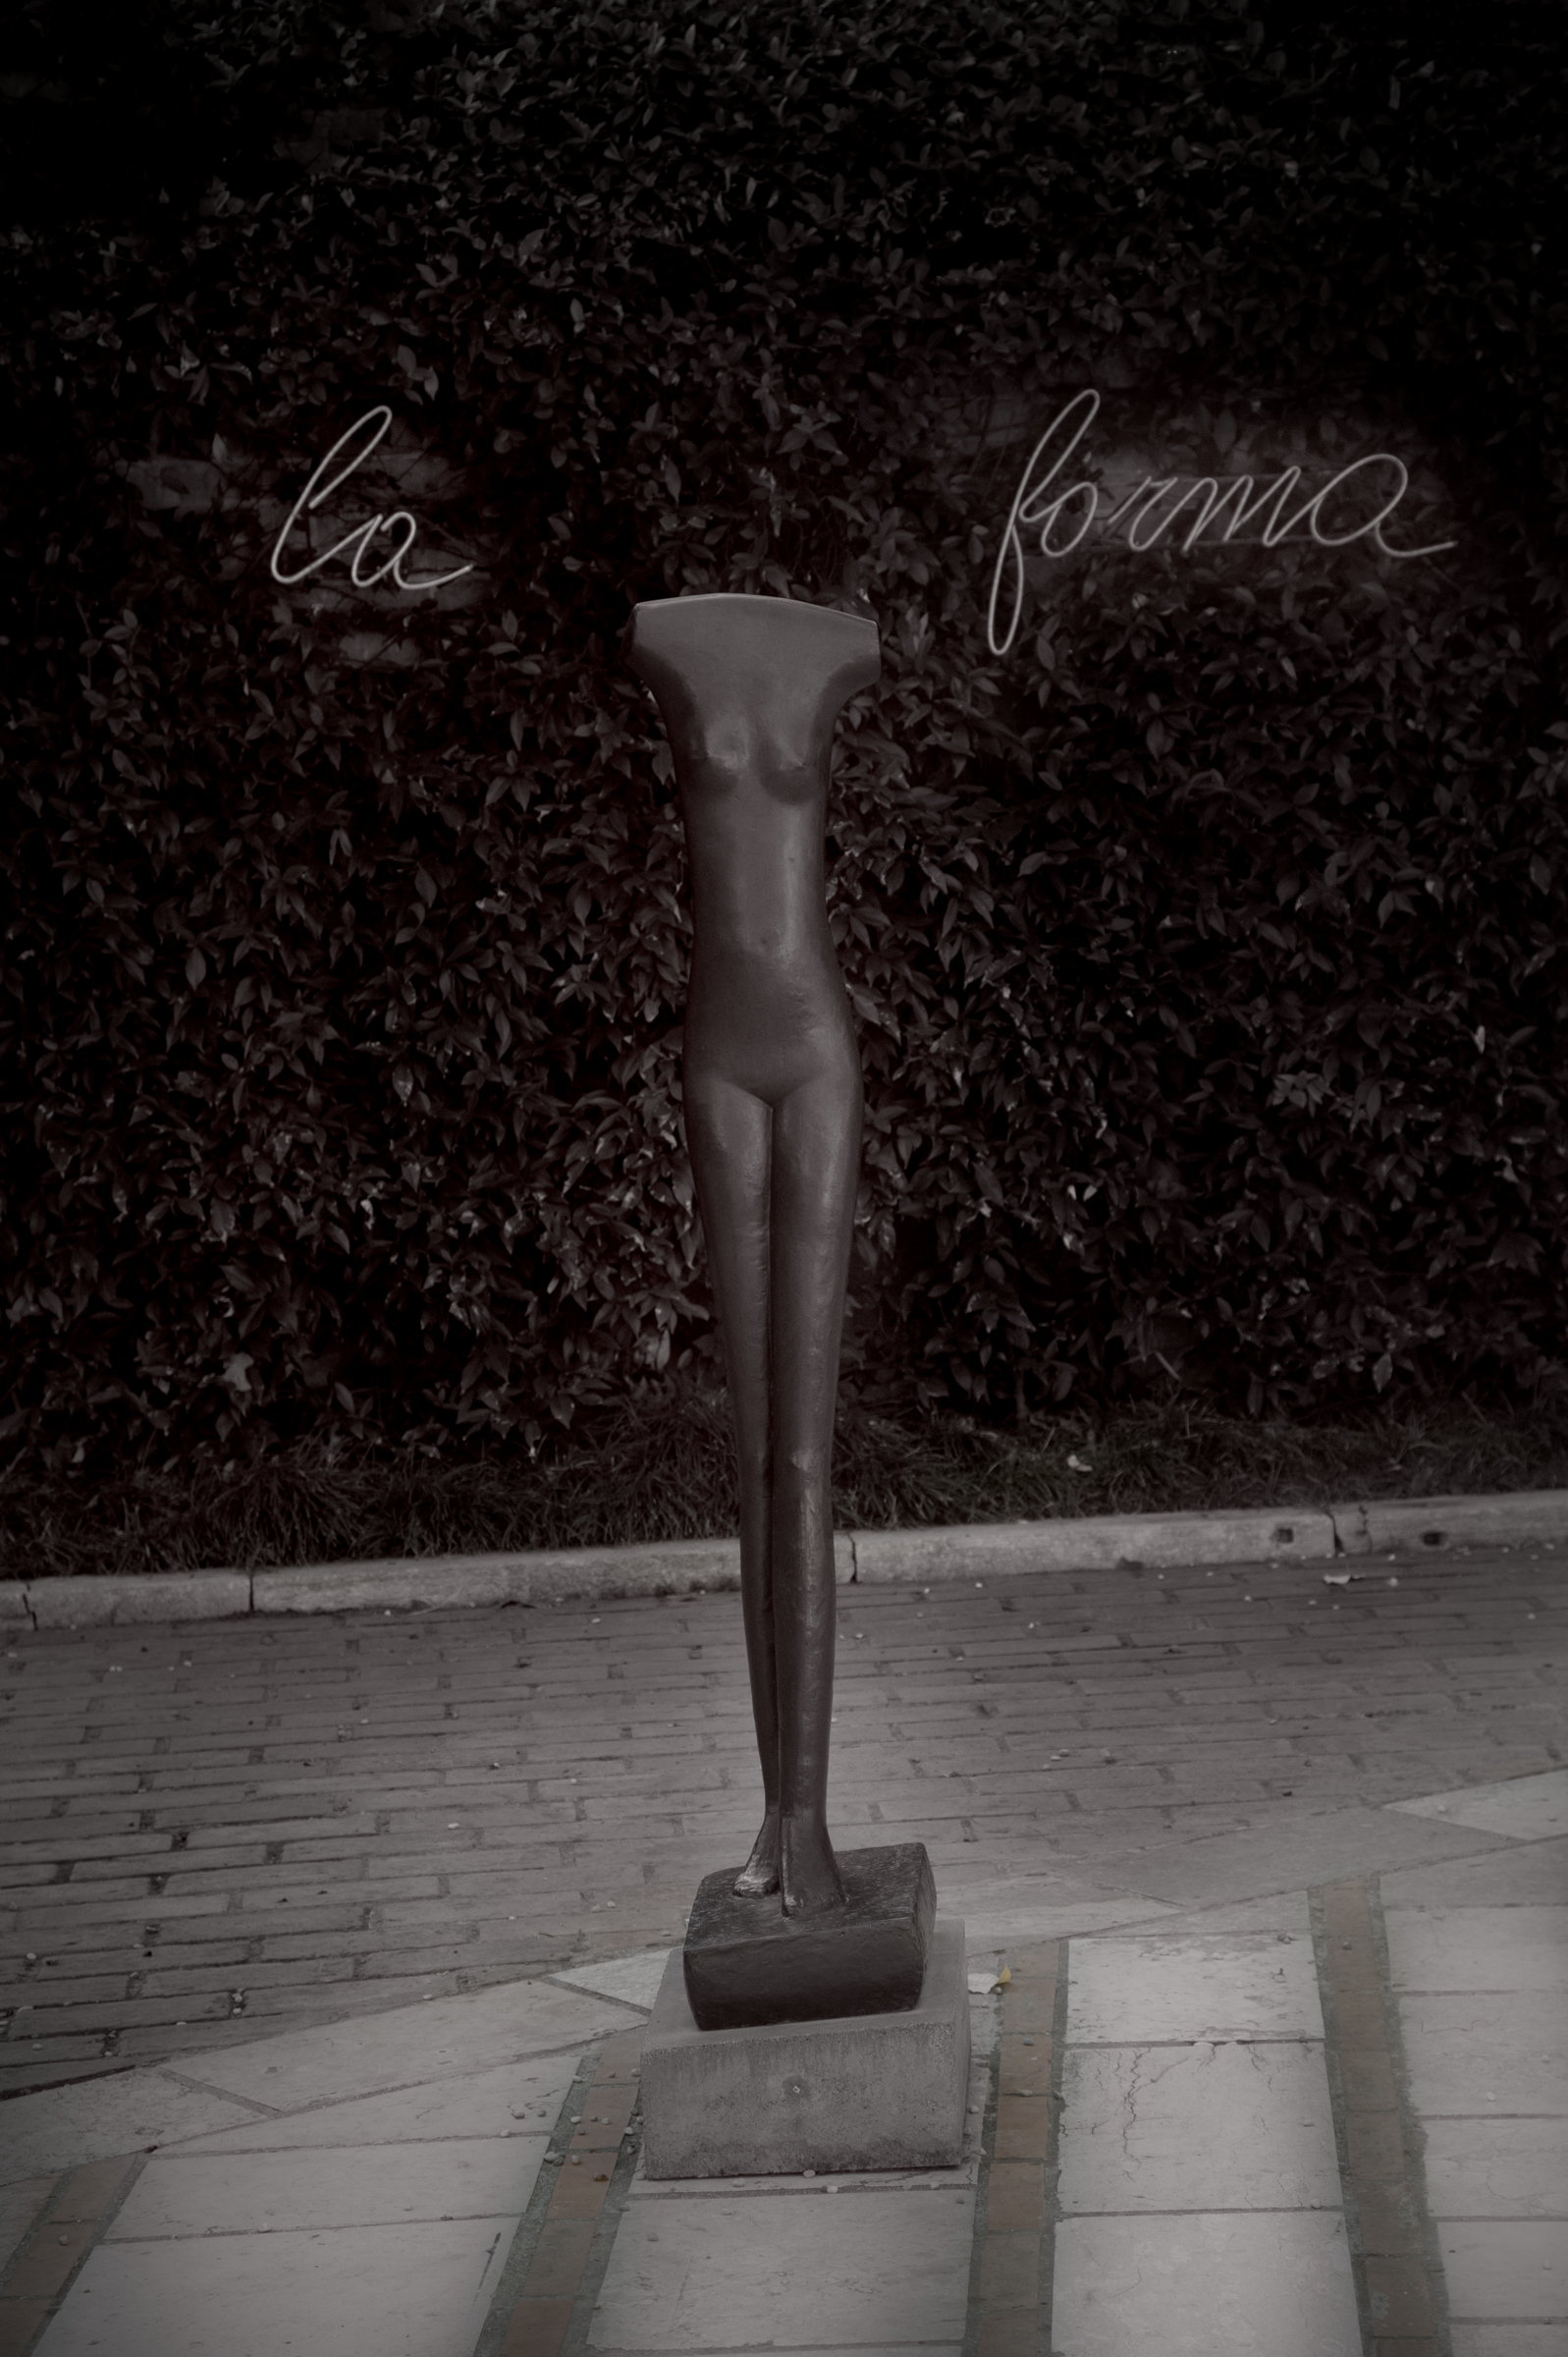 Guggenheim Museum Venice, Alberto Giacomettii Sculpture Woman Walking, Mario Merz Neon Text